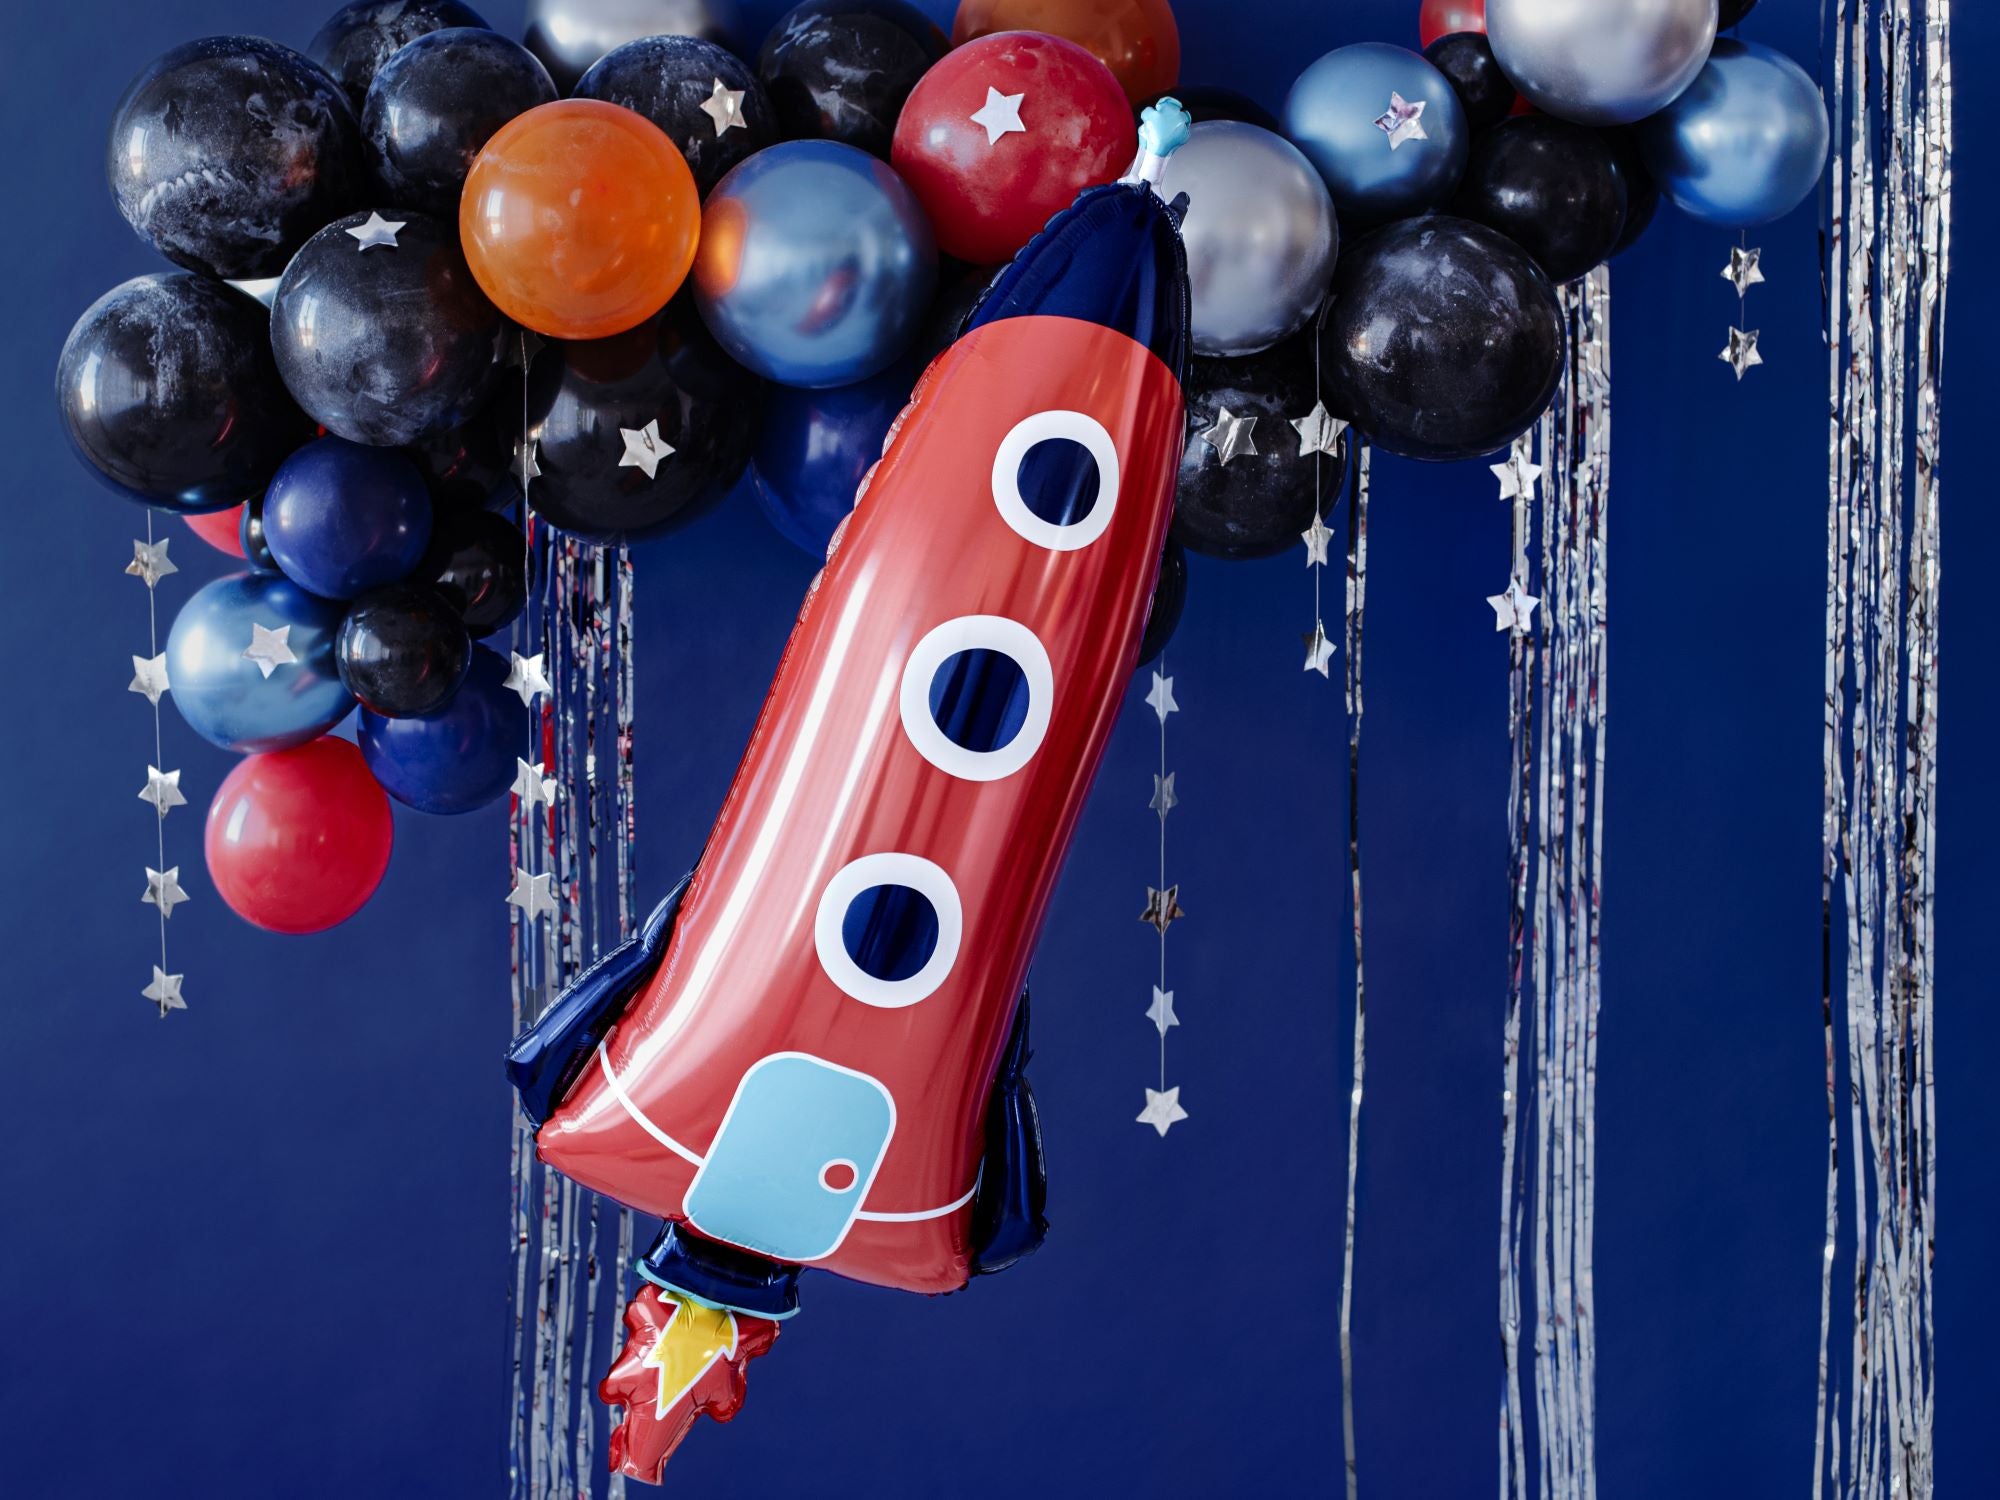 Space Rocket Foil Balloon party decoration